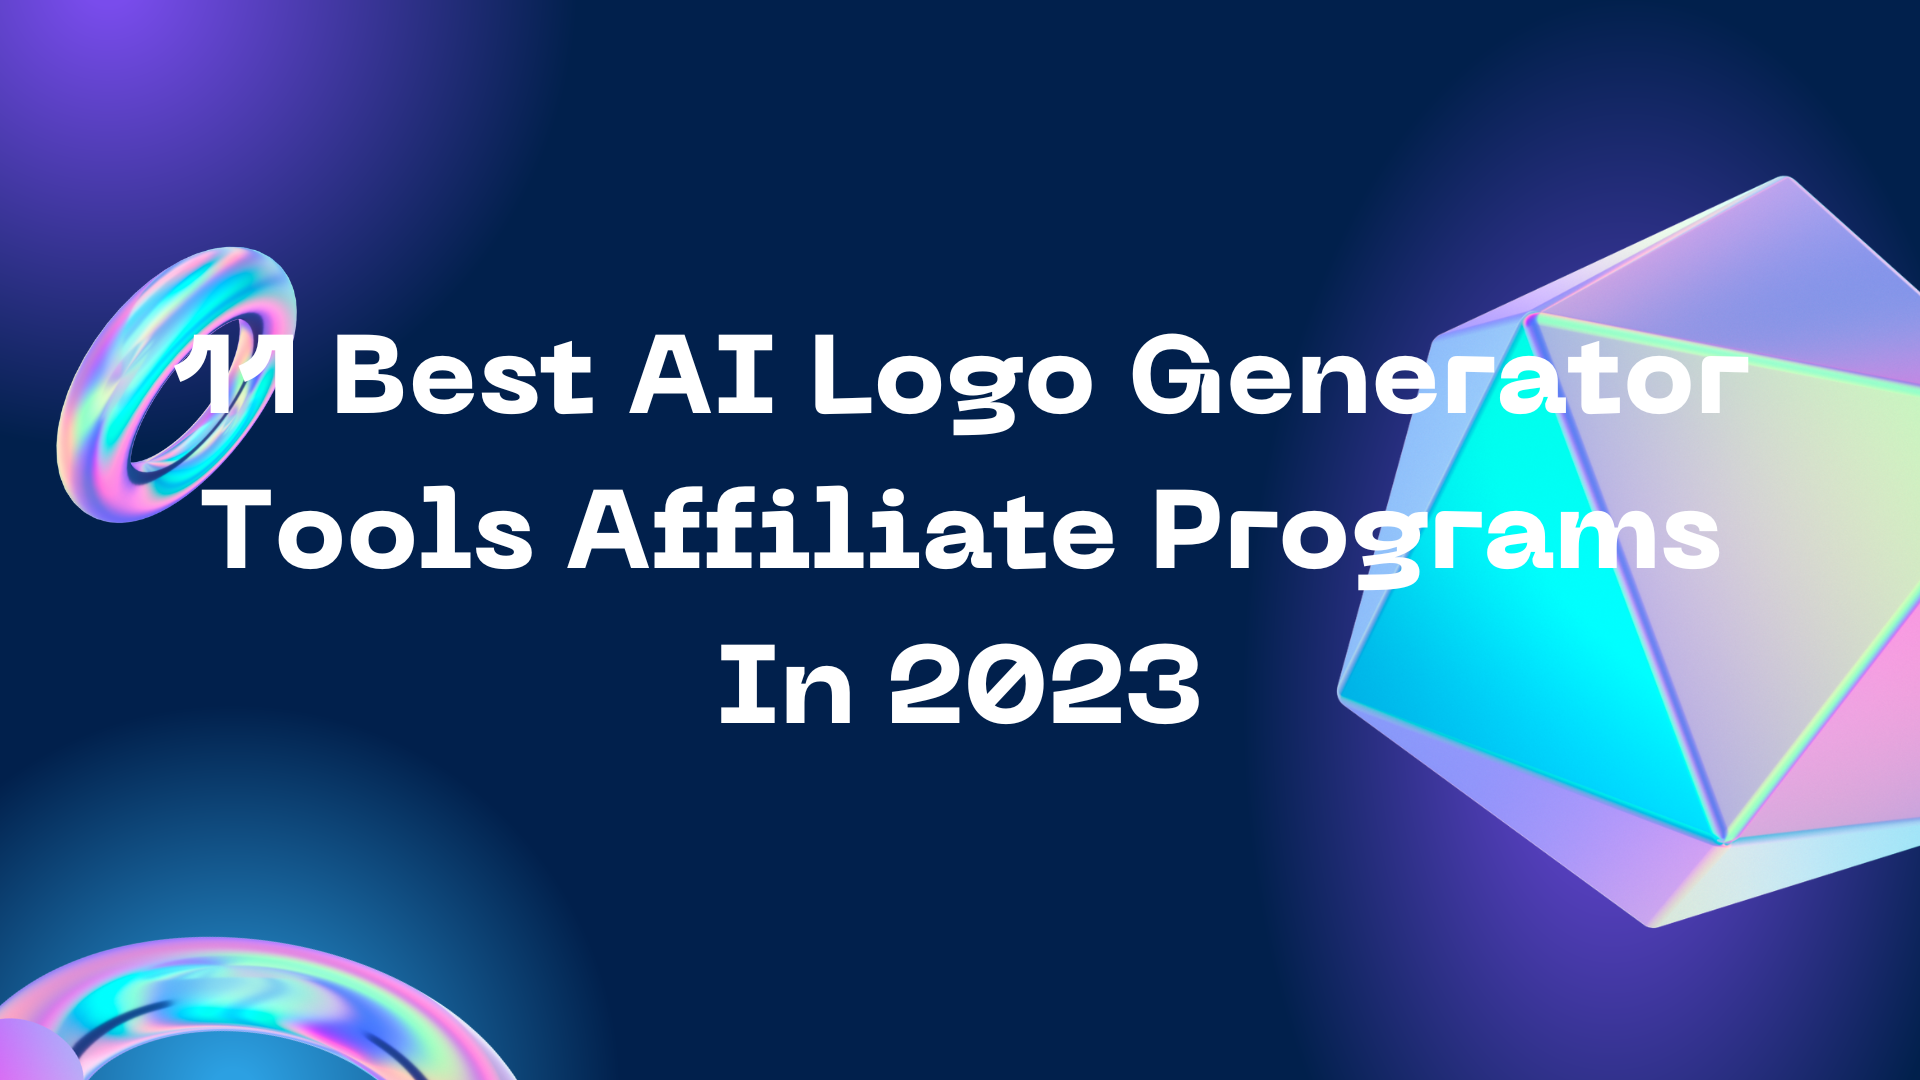 11 Best AI Logo Generator Tools Affiliate Programs In 2023